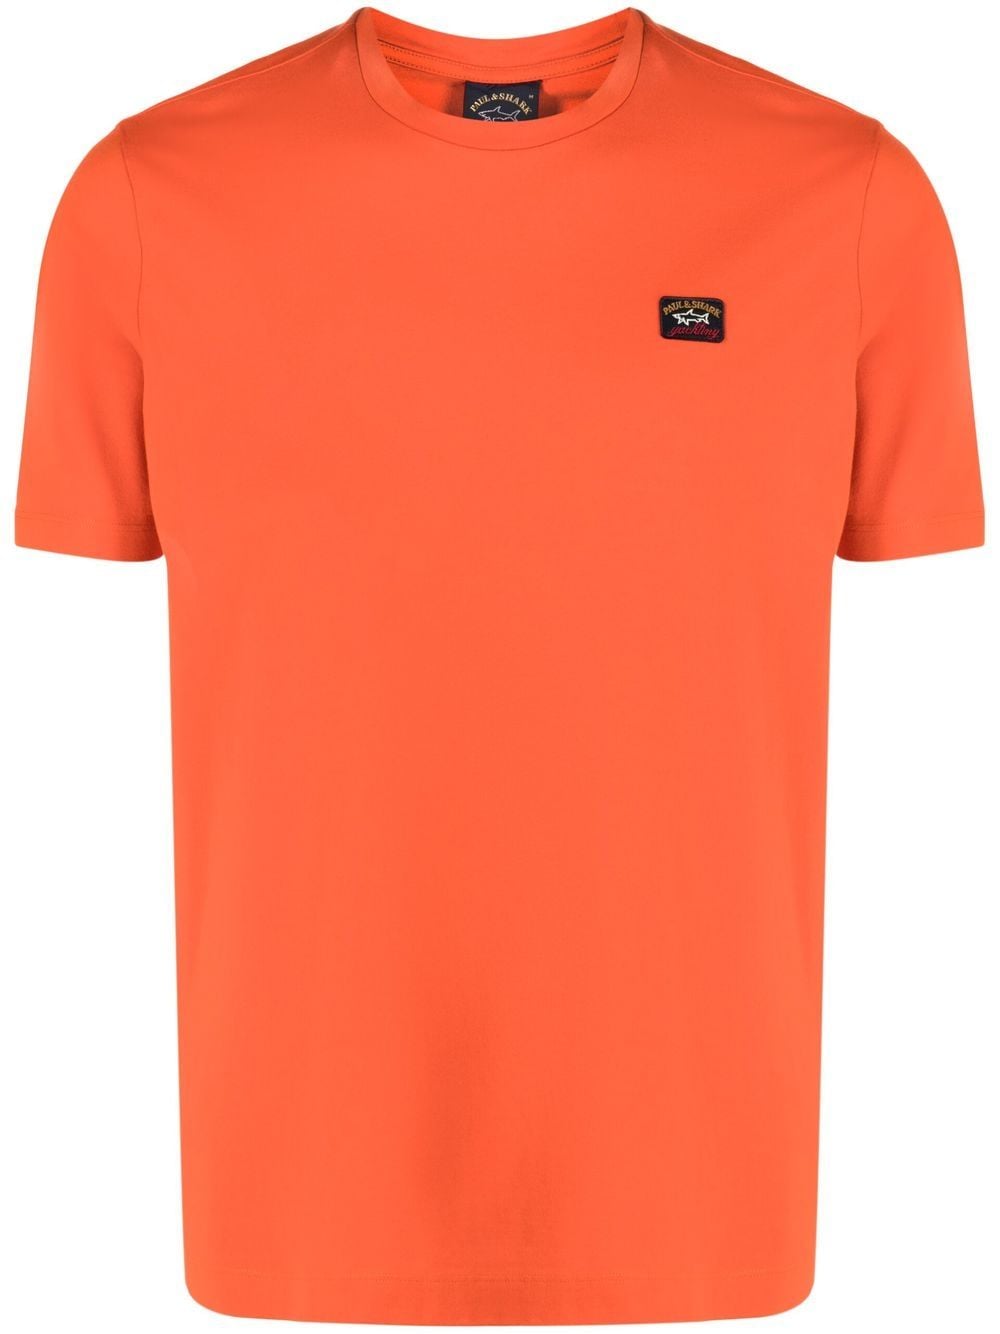 Paul & Shark embroidered logo T-shirt - Orange von Paul & Shark